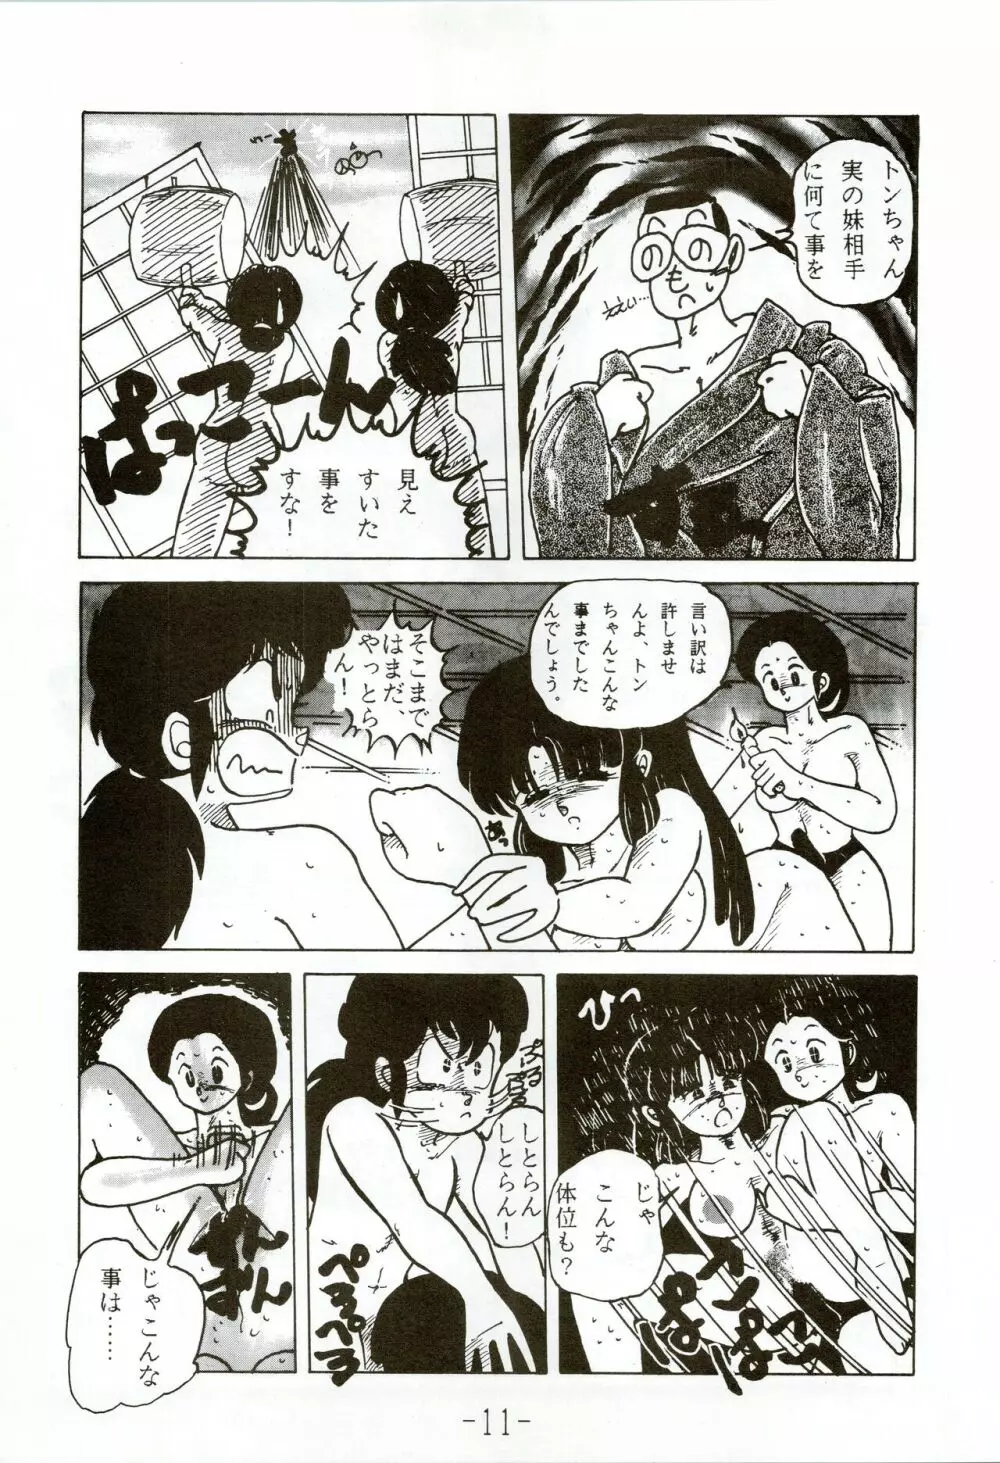 甲冑伝説 - page11